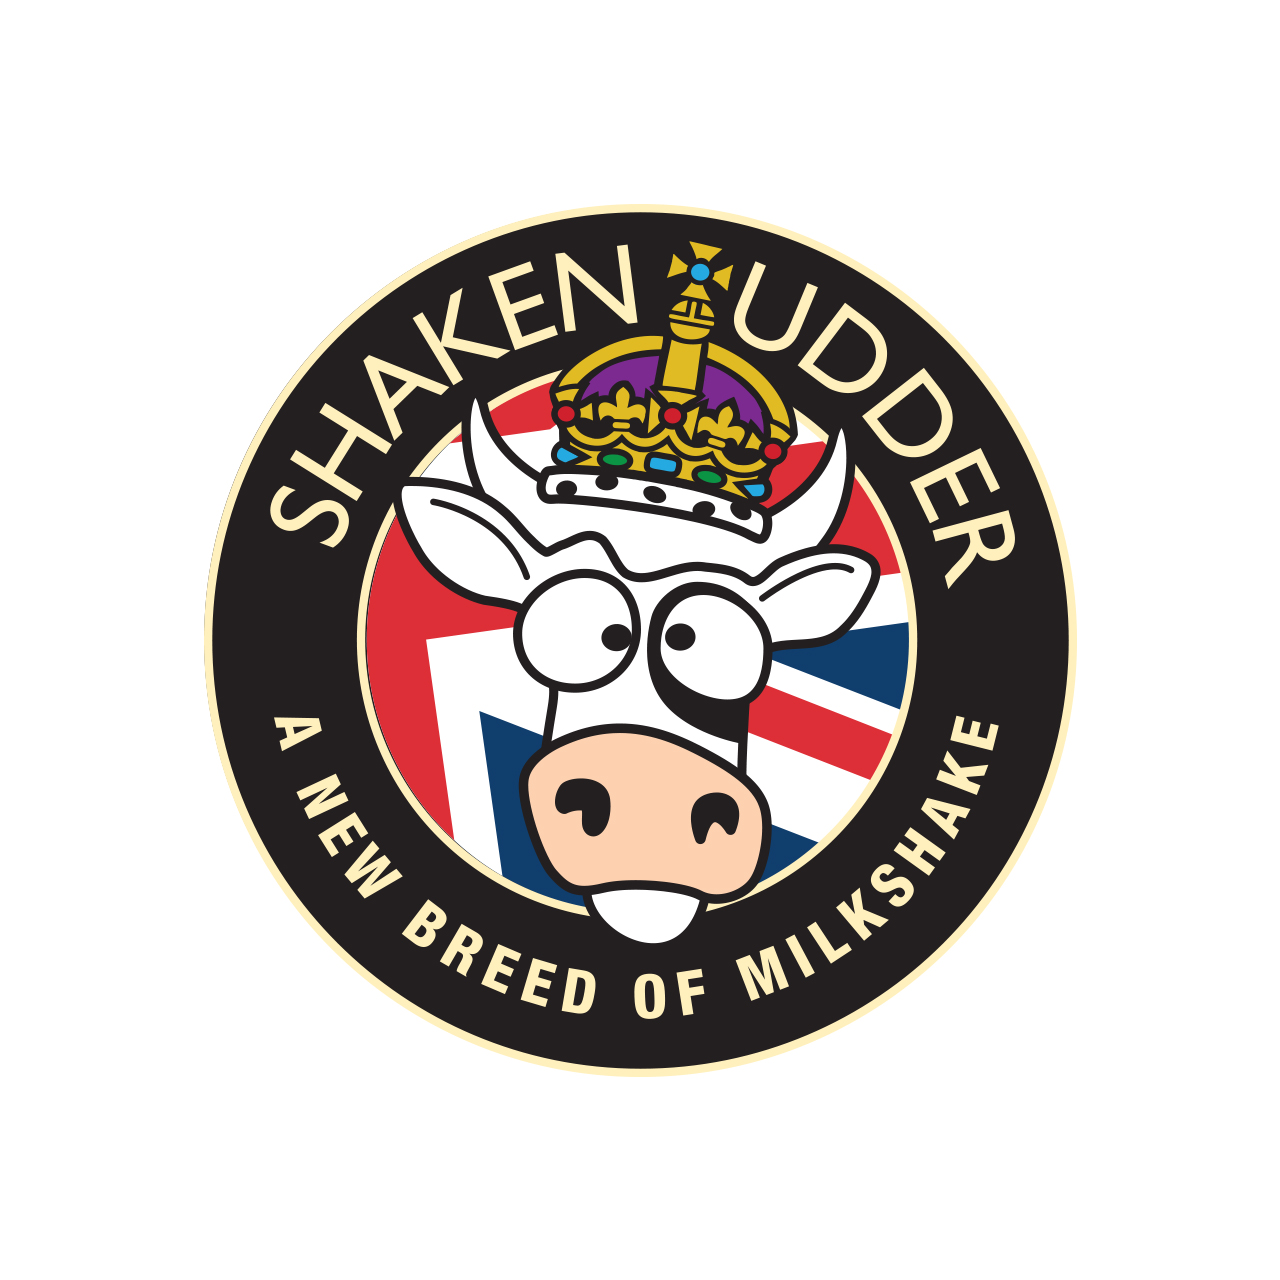 Shaken Udder Jubilee logo